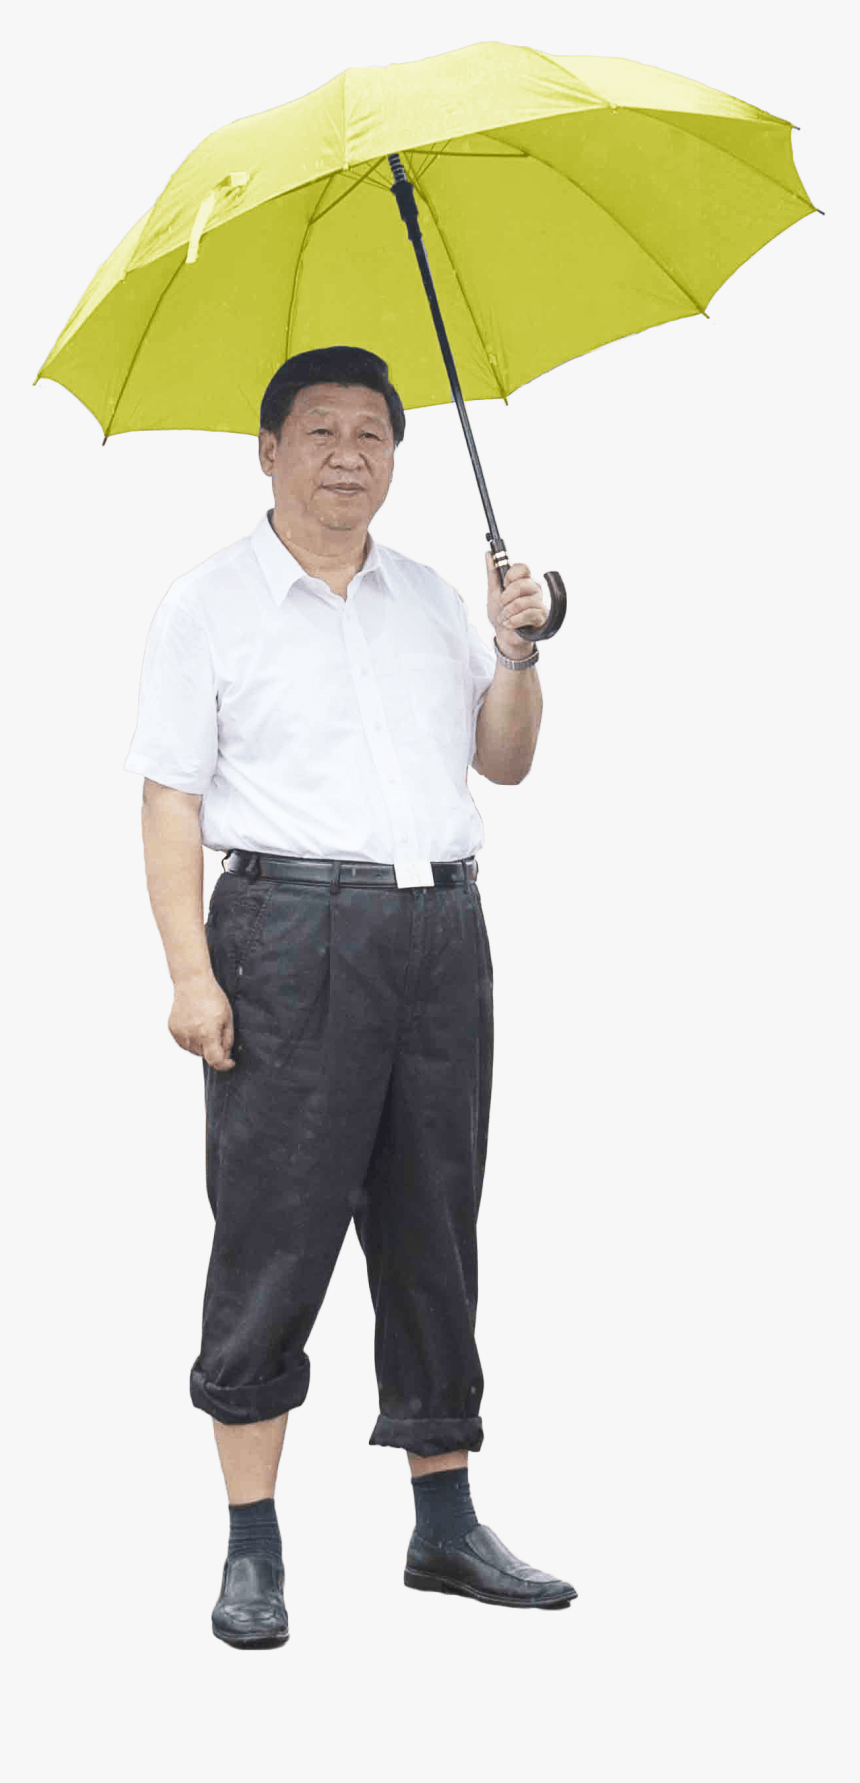 Xi Jinping Summer - Xi Jinping Transparent Background, HD Png Download, Free Download